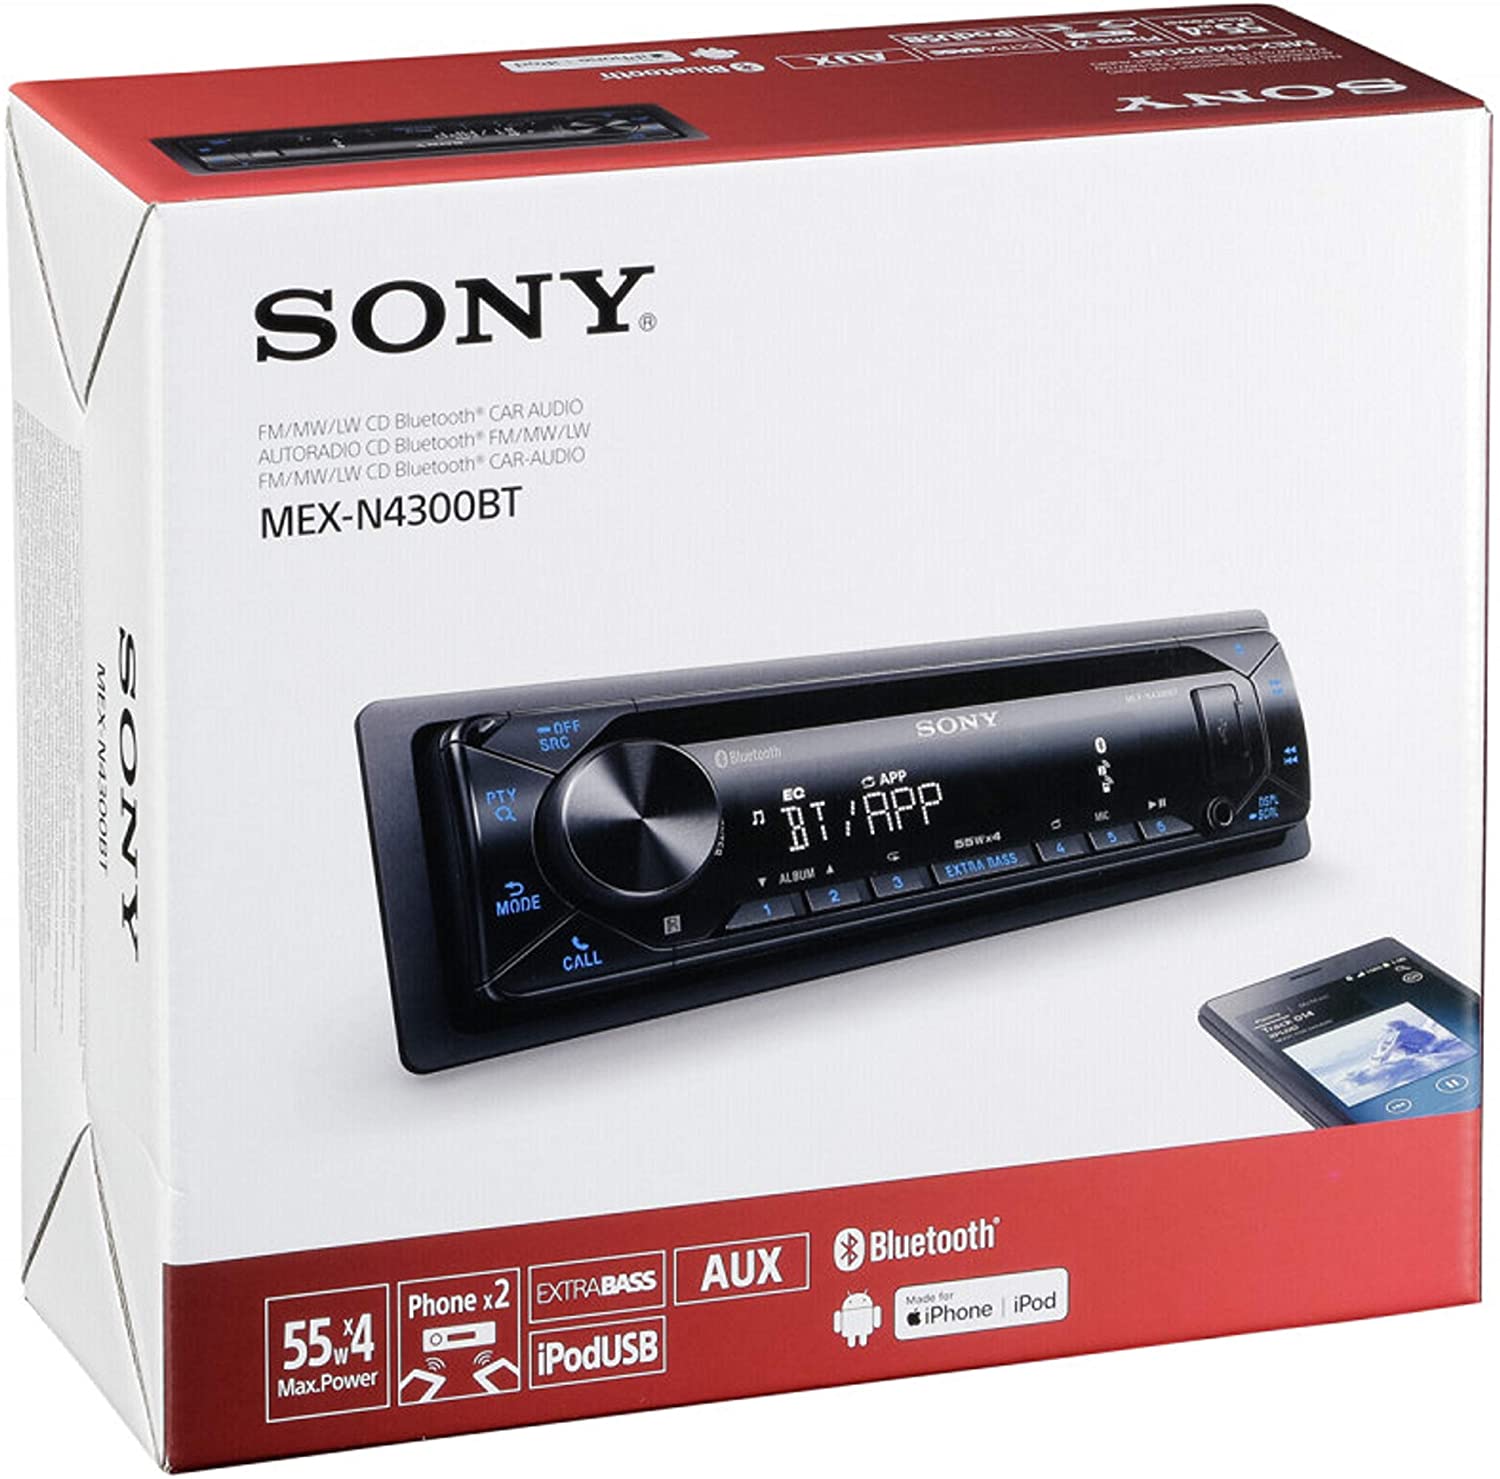 Vauxhall Agila, Corsa, Meriva, Tigra, Vivaro Bluetooth CD MP3 USB Car Stereo Upgrade Kit